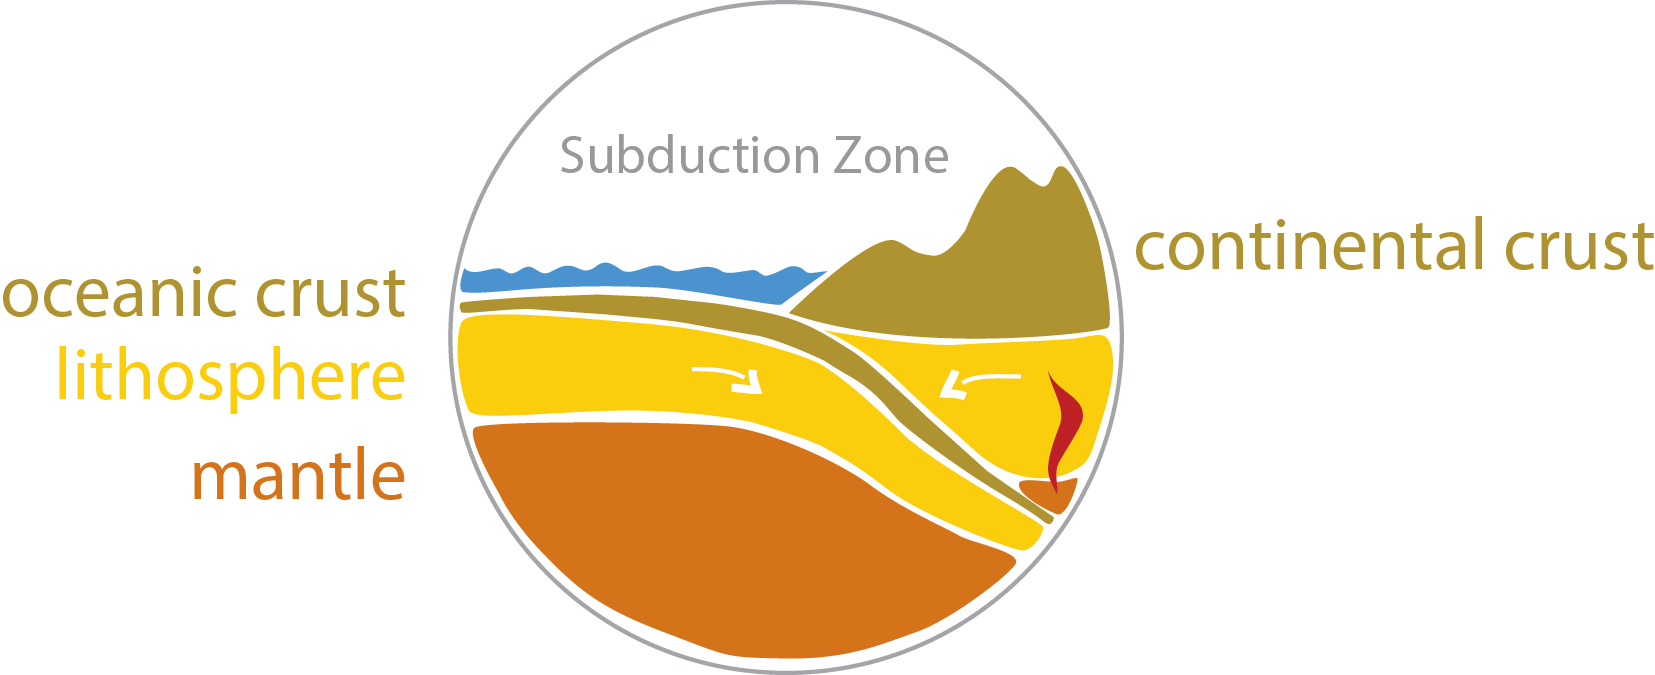 Subduction zone cartoon. ESNO